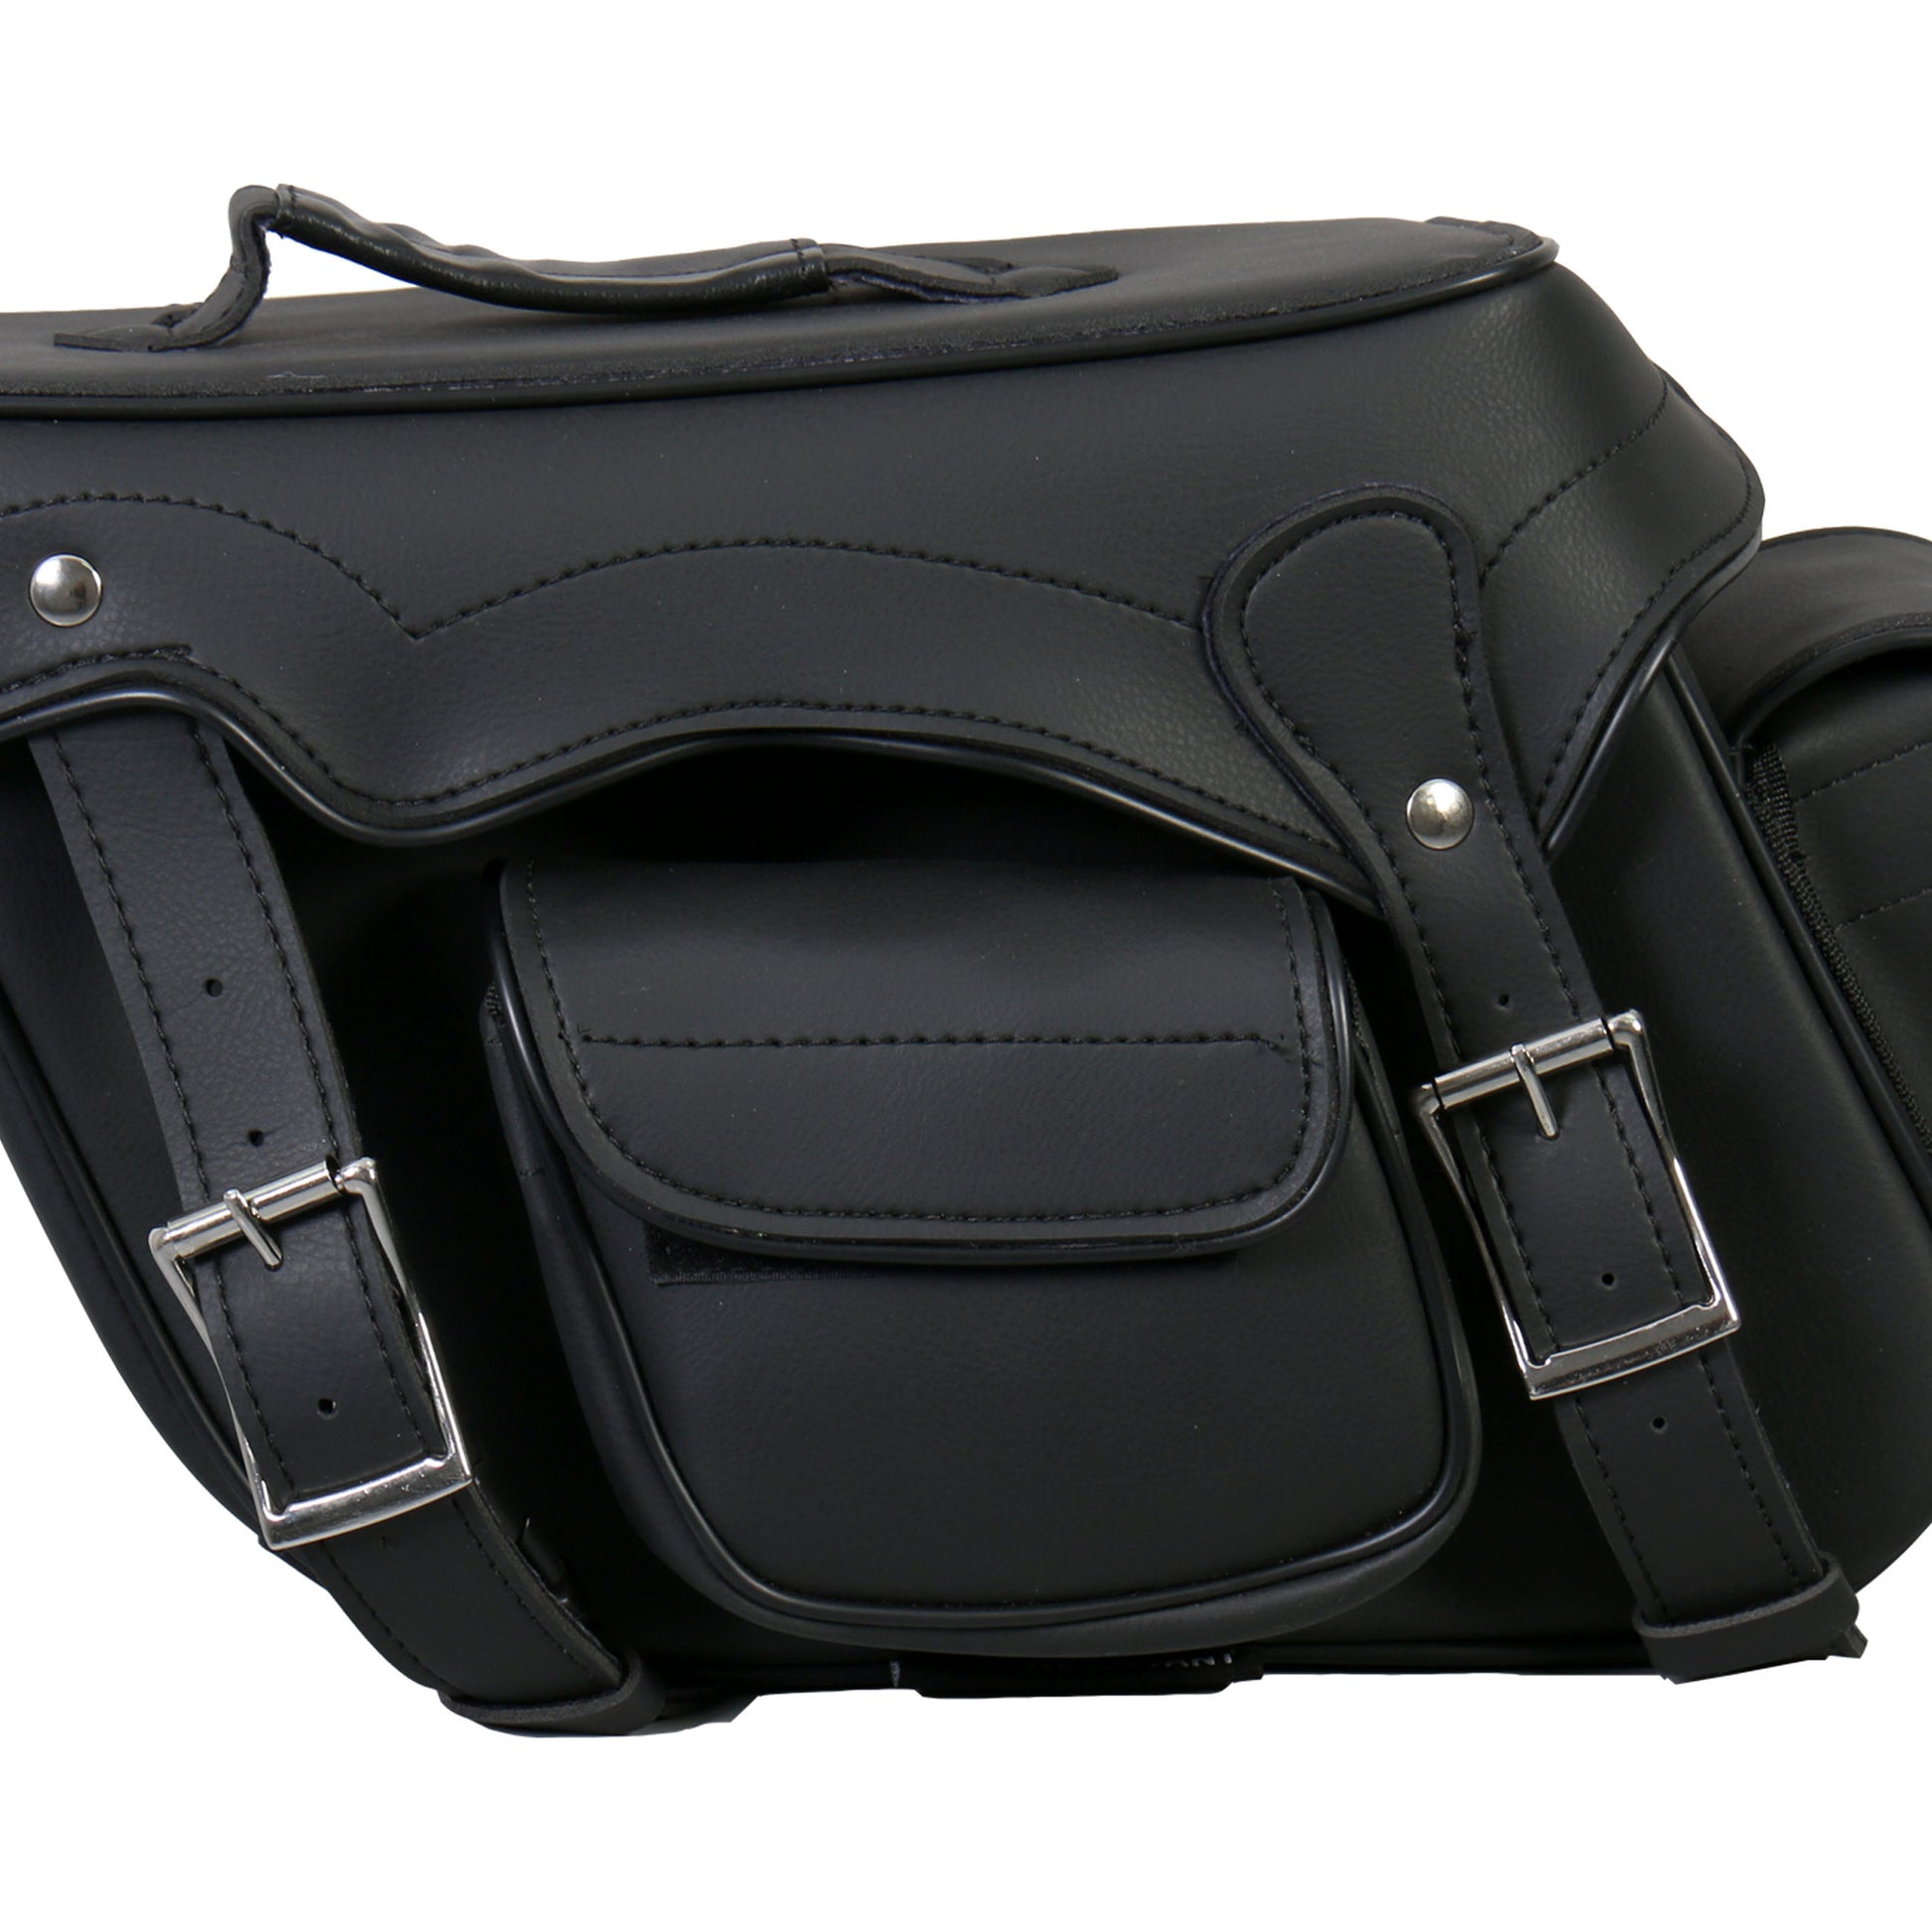 Hot Leathers SDA1004 Extra Large Saddle Bag with Concealed Carry Pocket 17X10X6